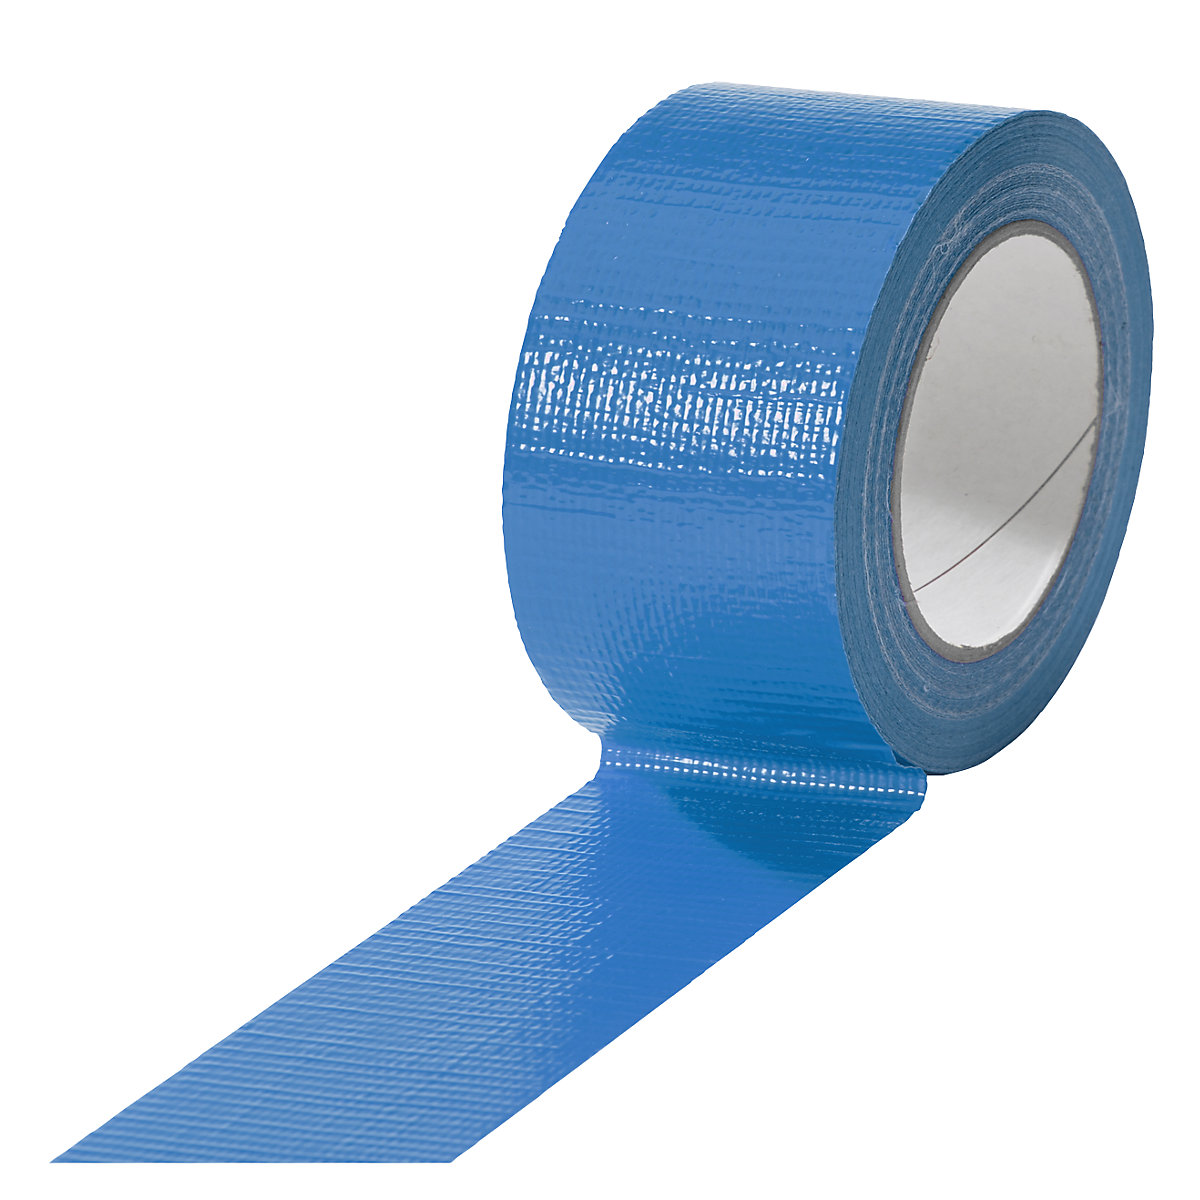 Tkaninová páska, v různých barvách, bal.j. 18 rolí, modrá, šířka pásky 50 mm-10